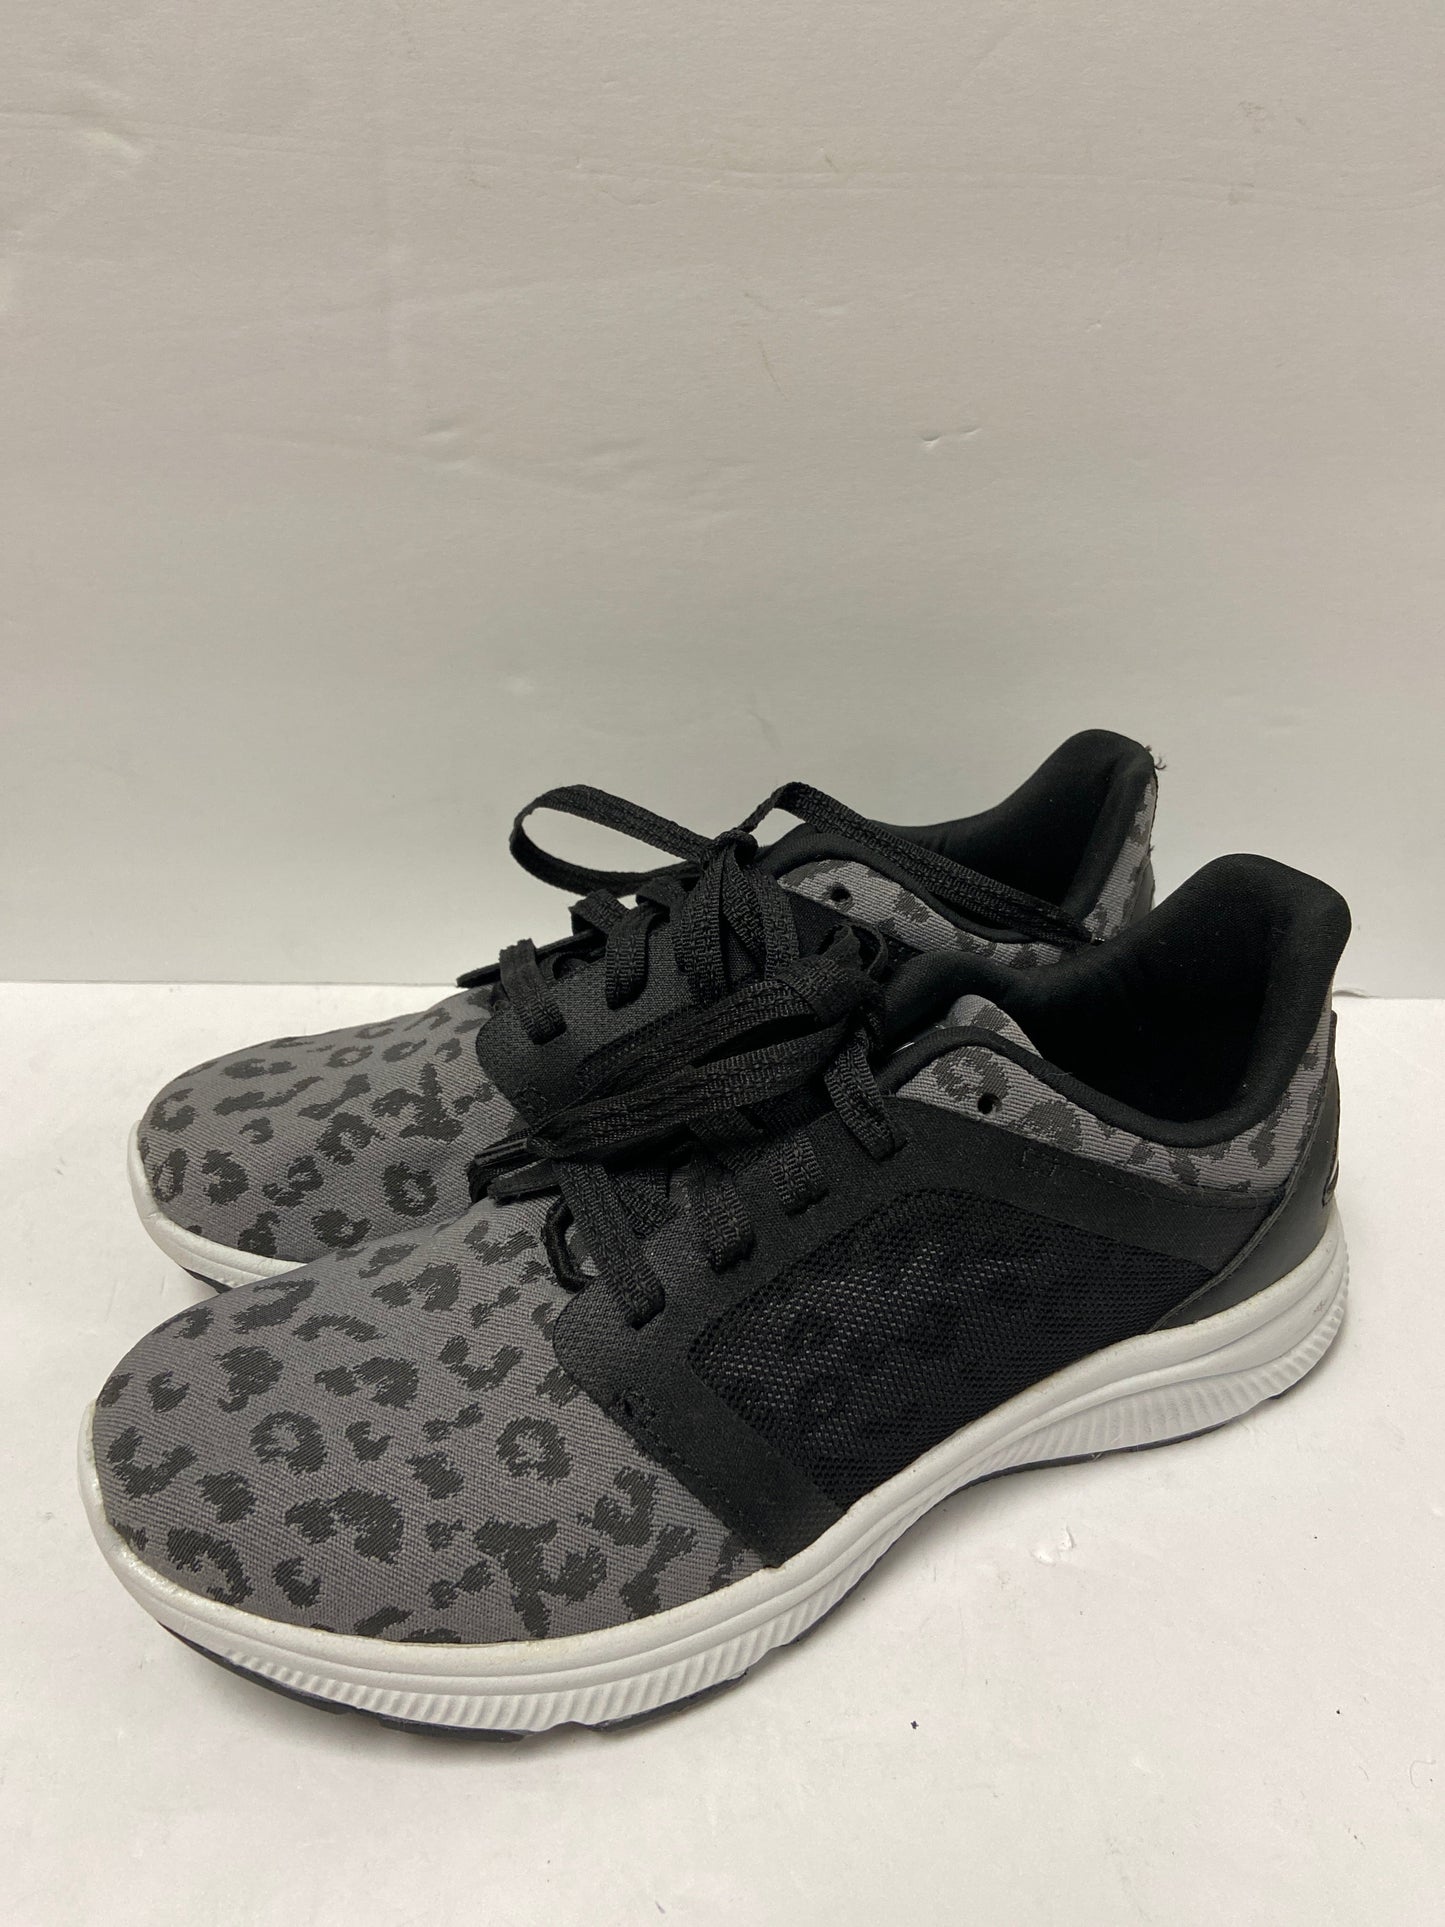 Grey Shoes Athletic Avia, Size 7